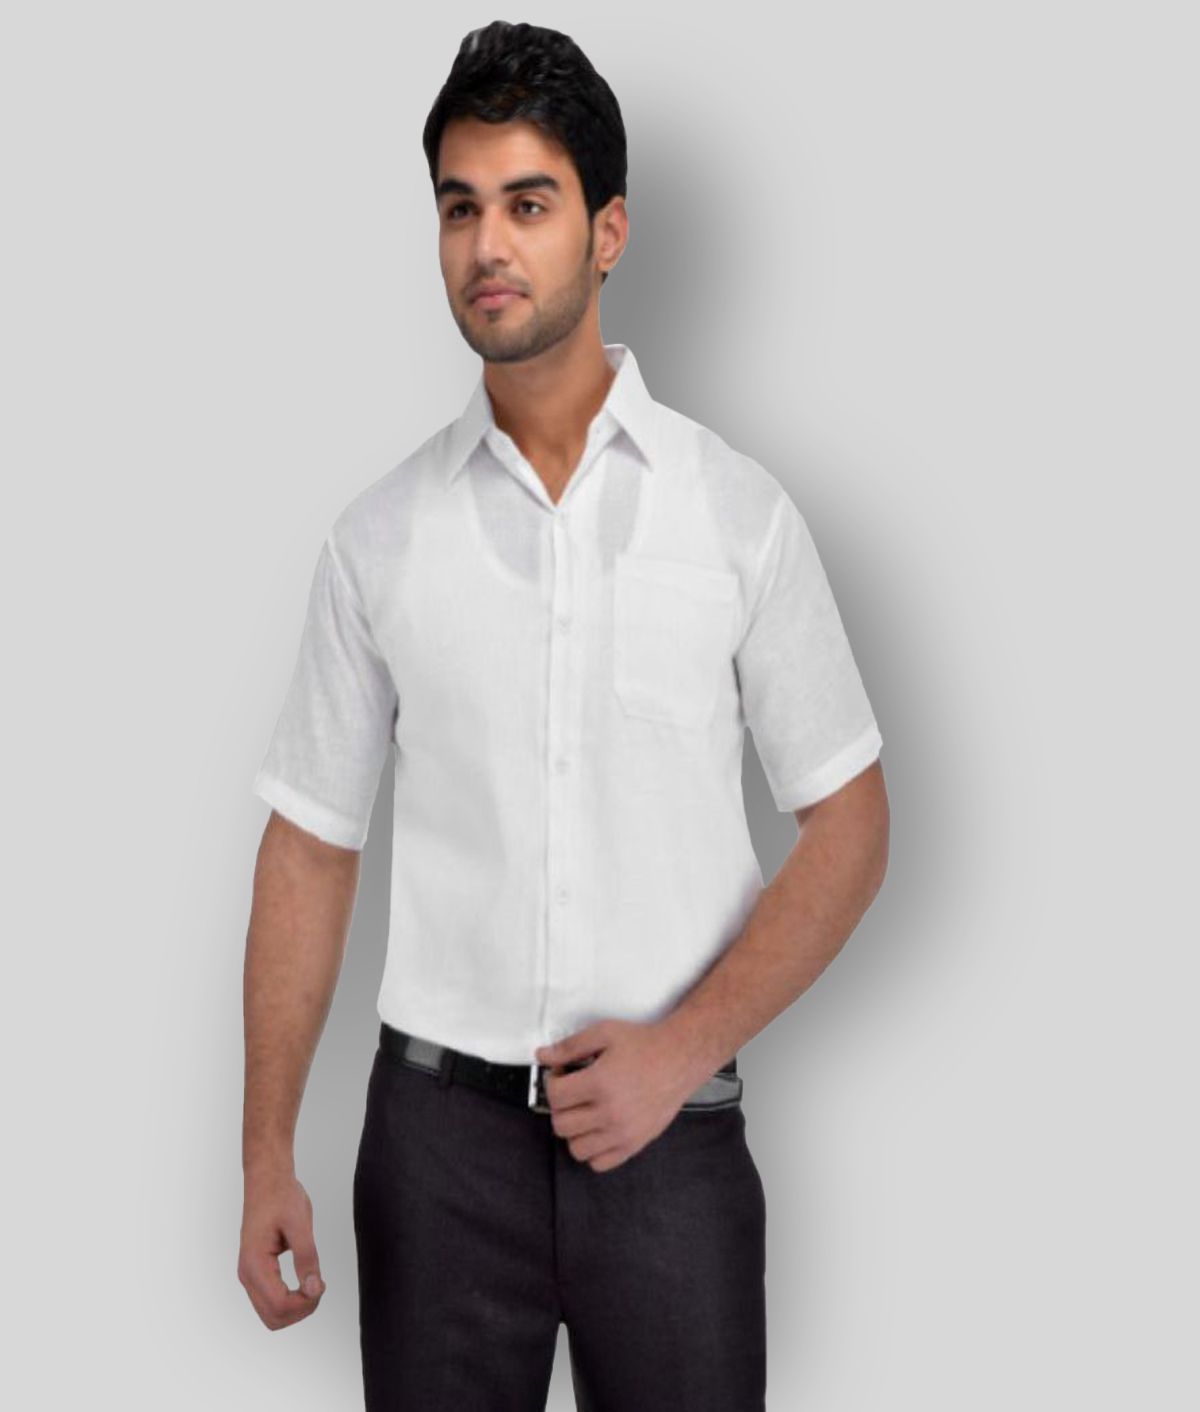     			DESHBANDHU DBK - White Cotton Regular Fit Men's Formal Shirt (Pack of 1)